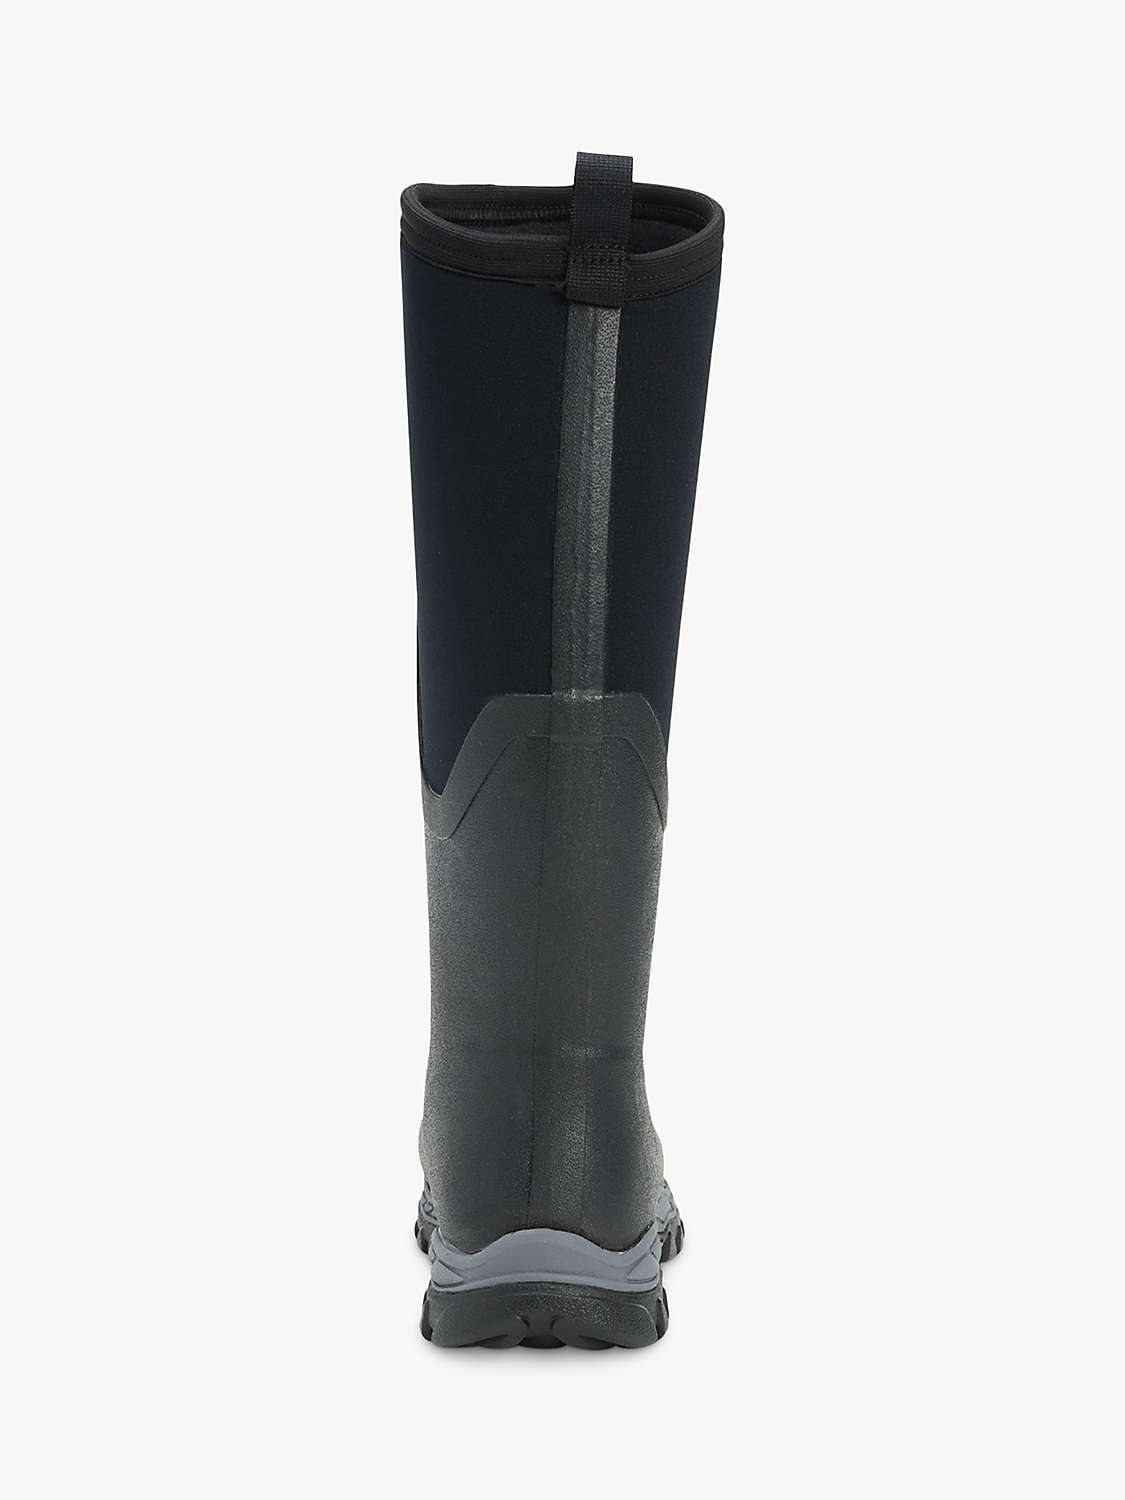 Buy Muck Arctic Sport II Tall Wellington Boots Online at johnlewis.com